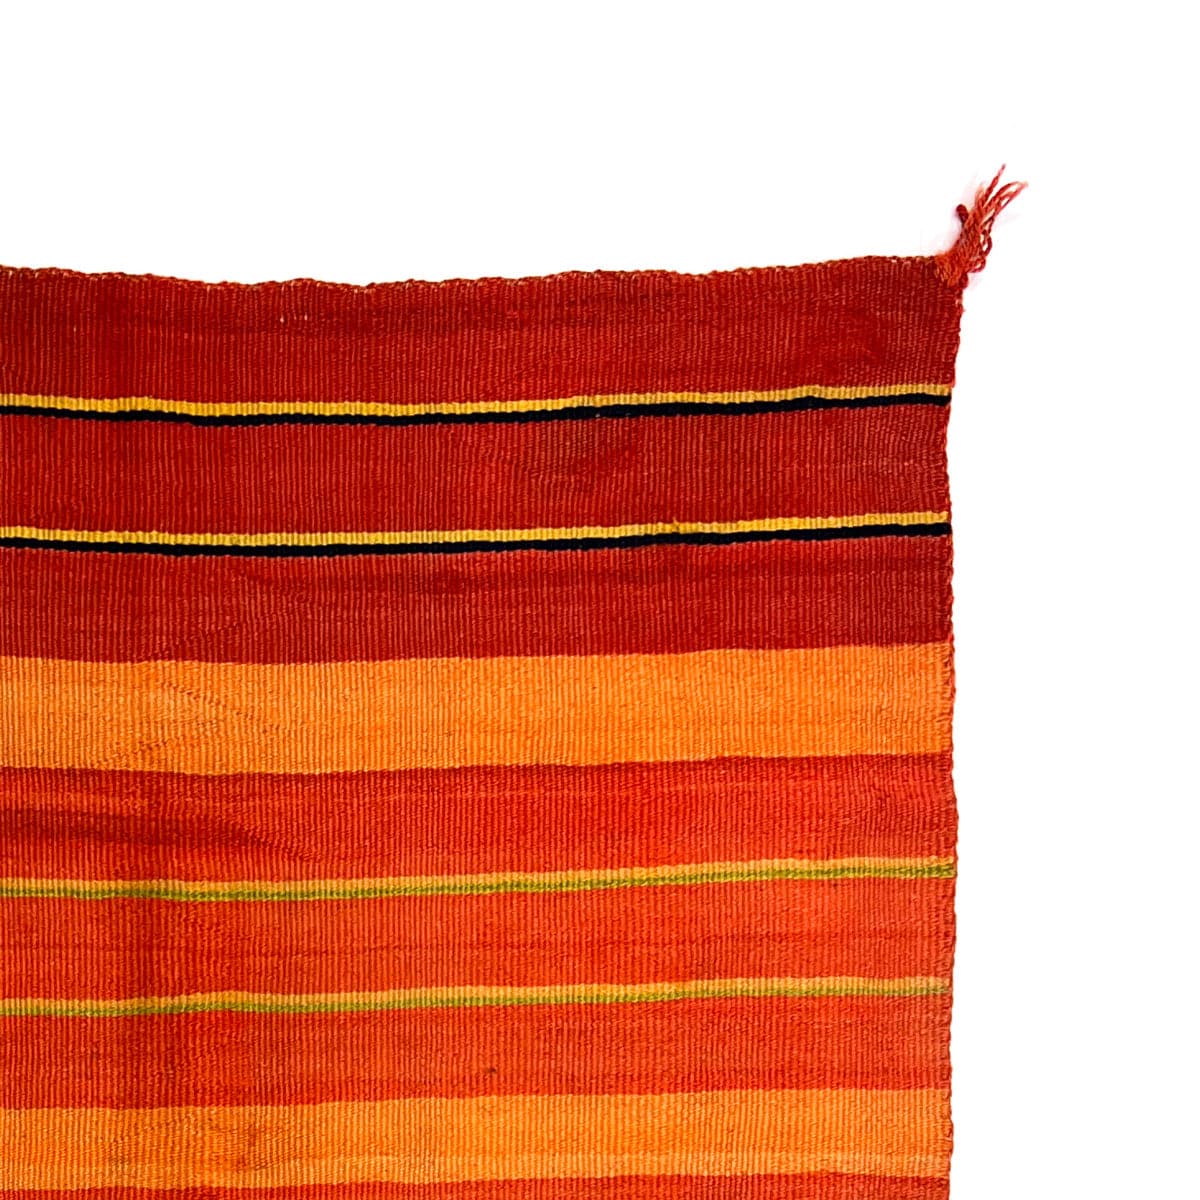 Navajo Transitional Double Saddle Blanket with Indigo Dye c. 1880s, 45" x 34" (T6386) 3